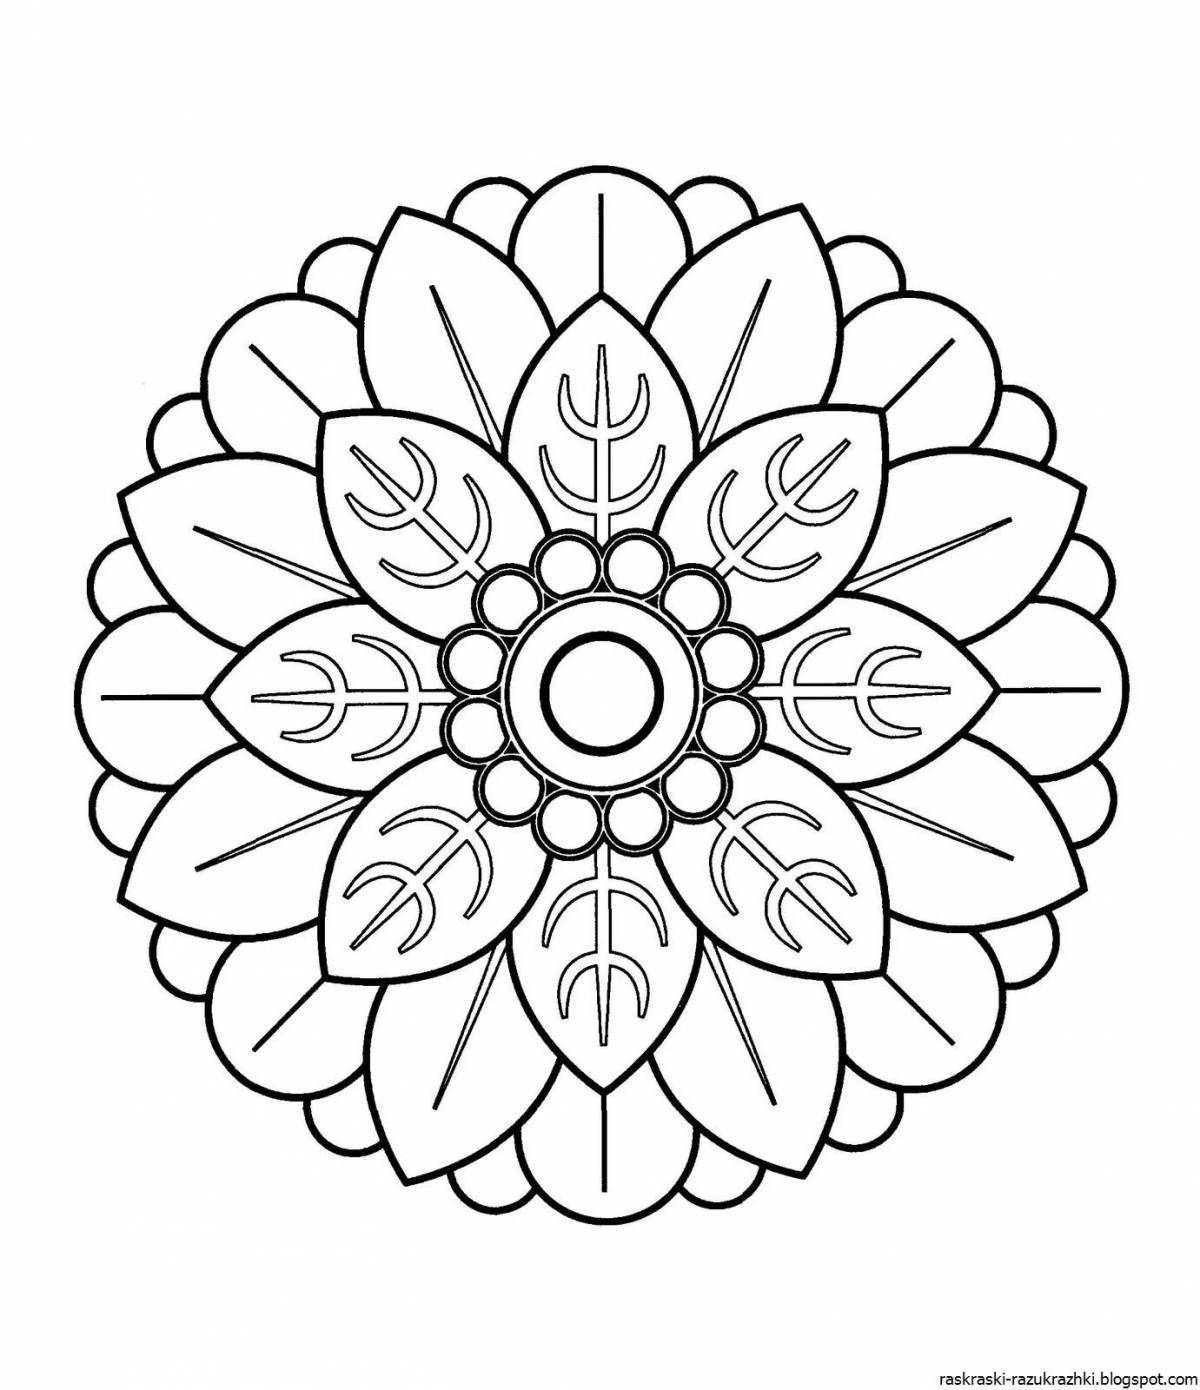 Ornate flower mandala coloring page